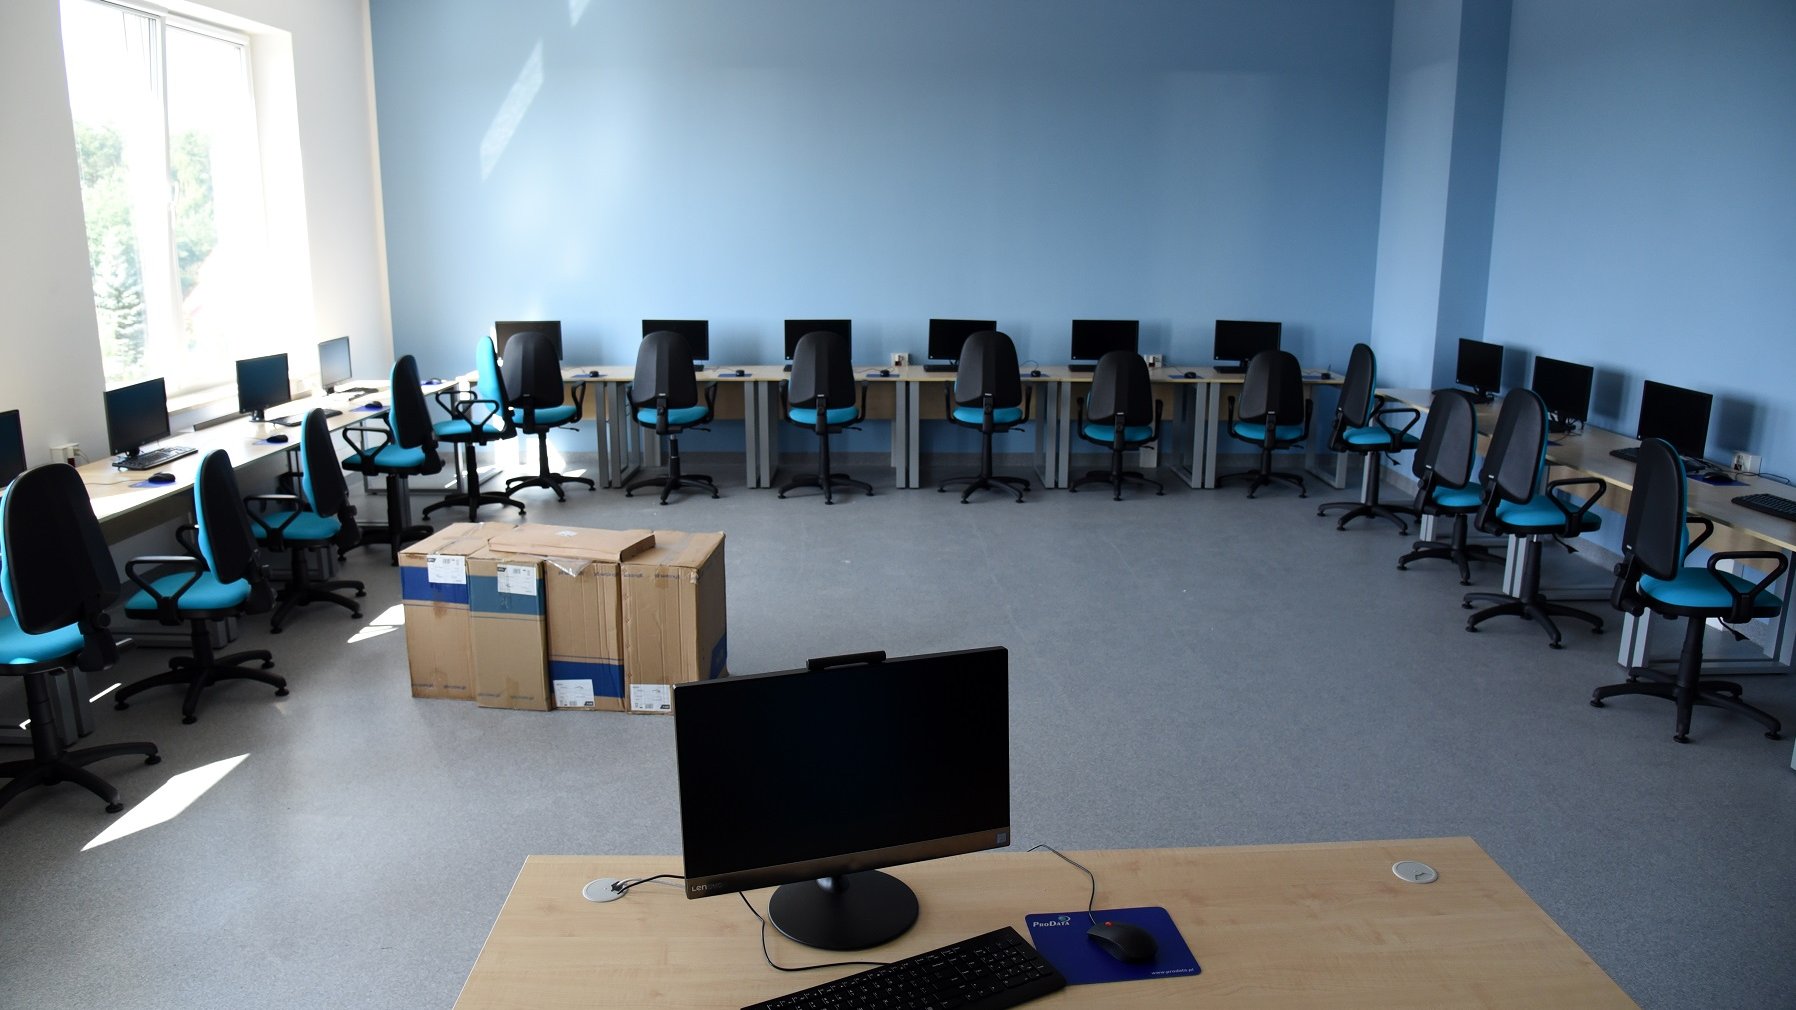 Klasa z komputerami na biurkach czeka na uczniów